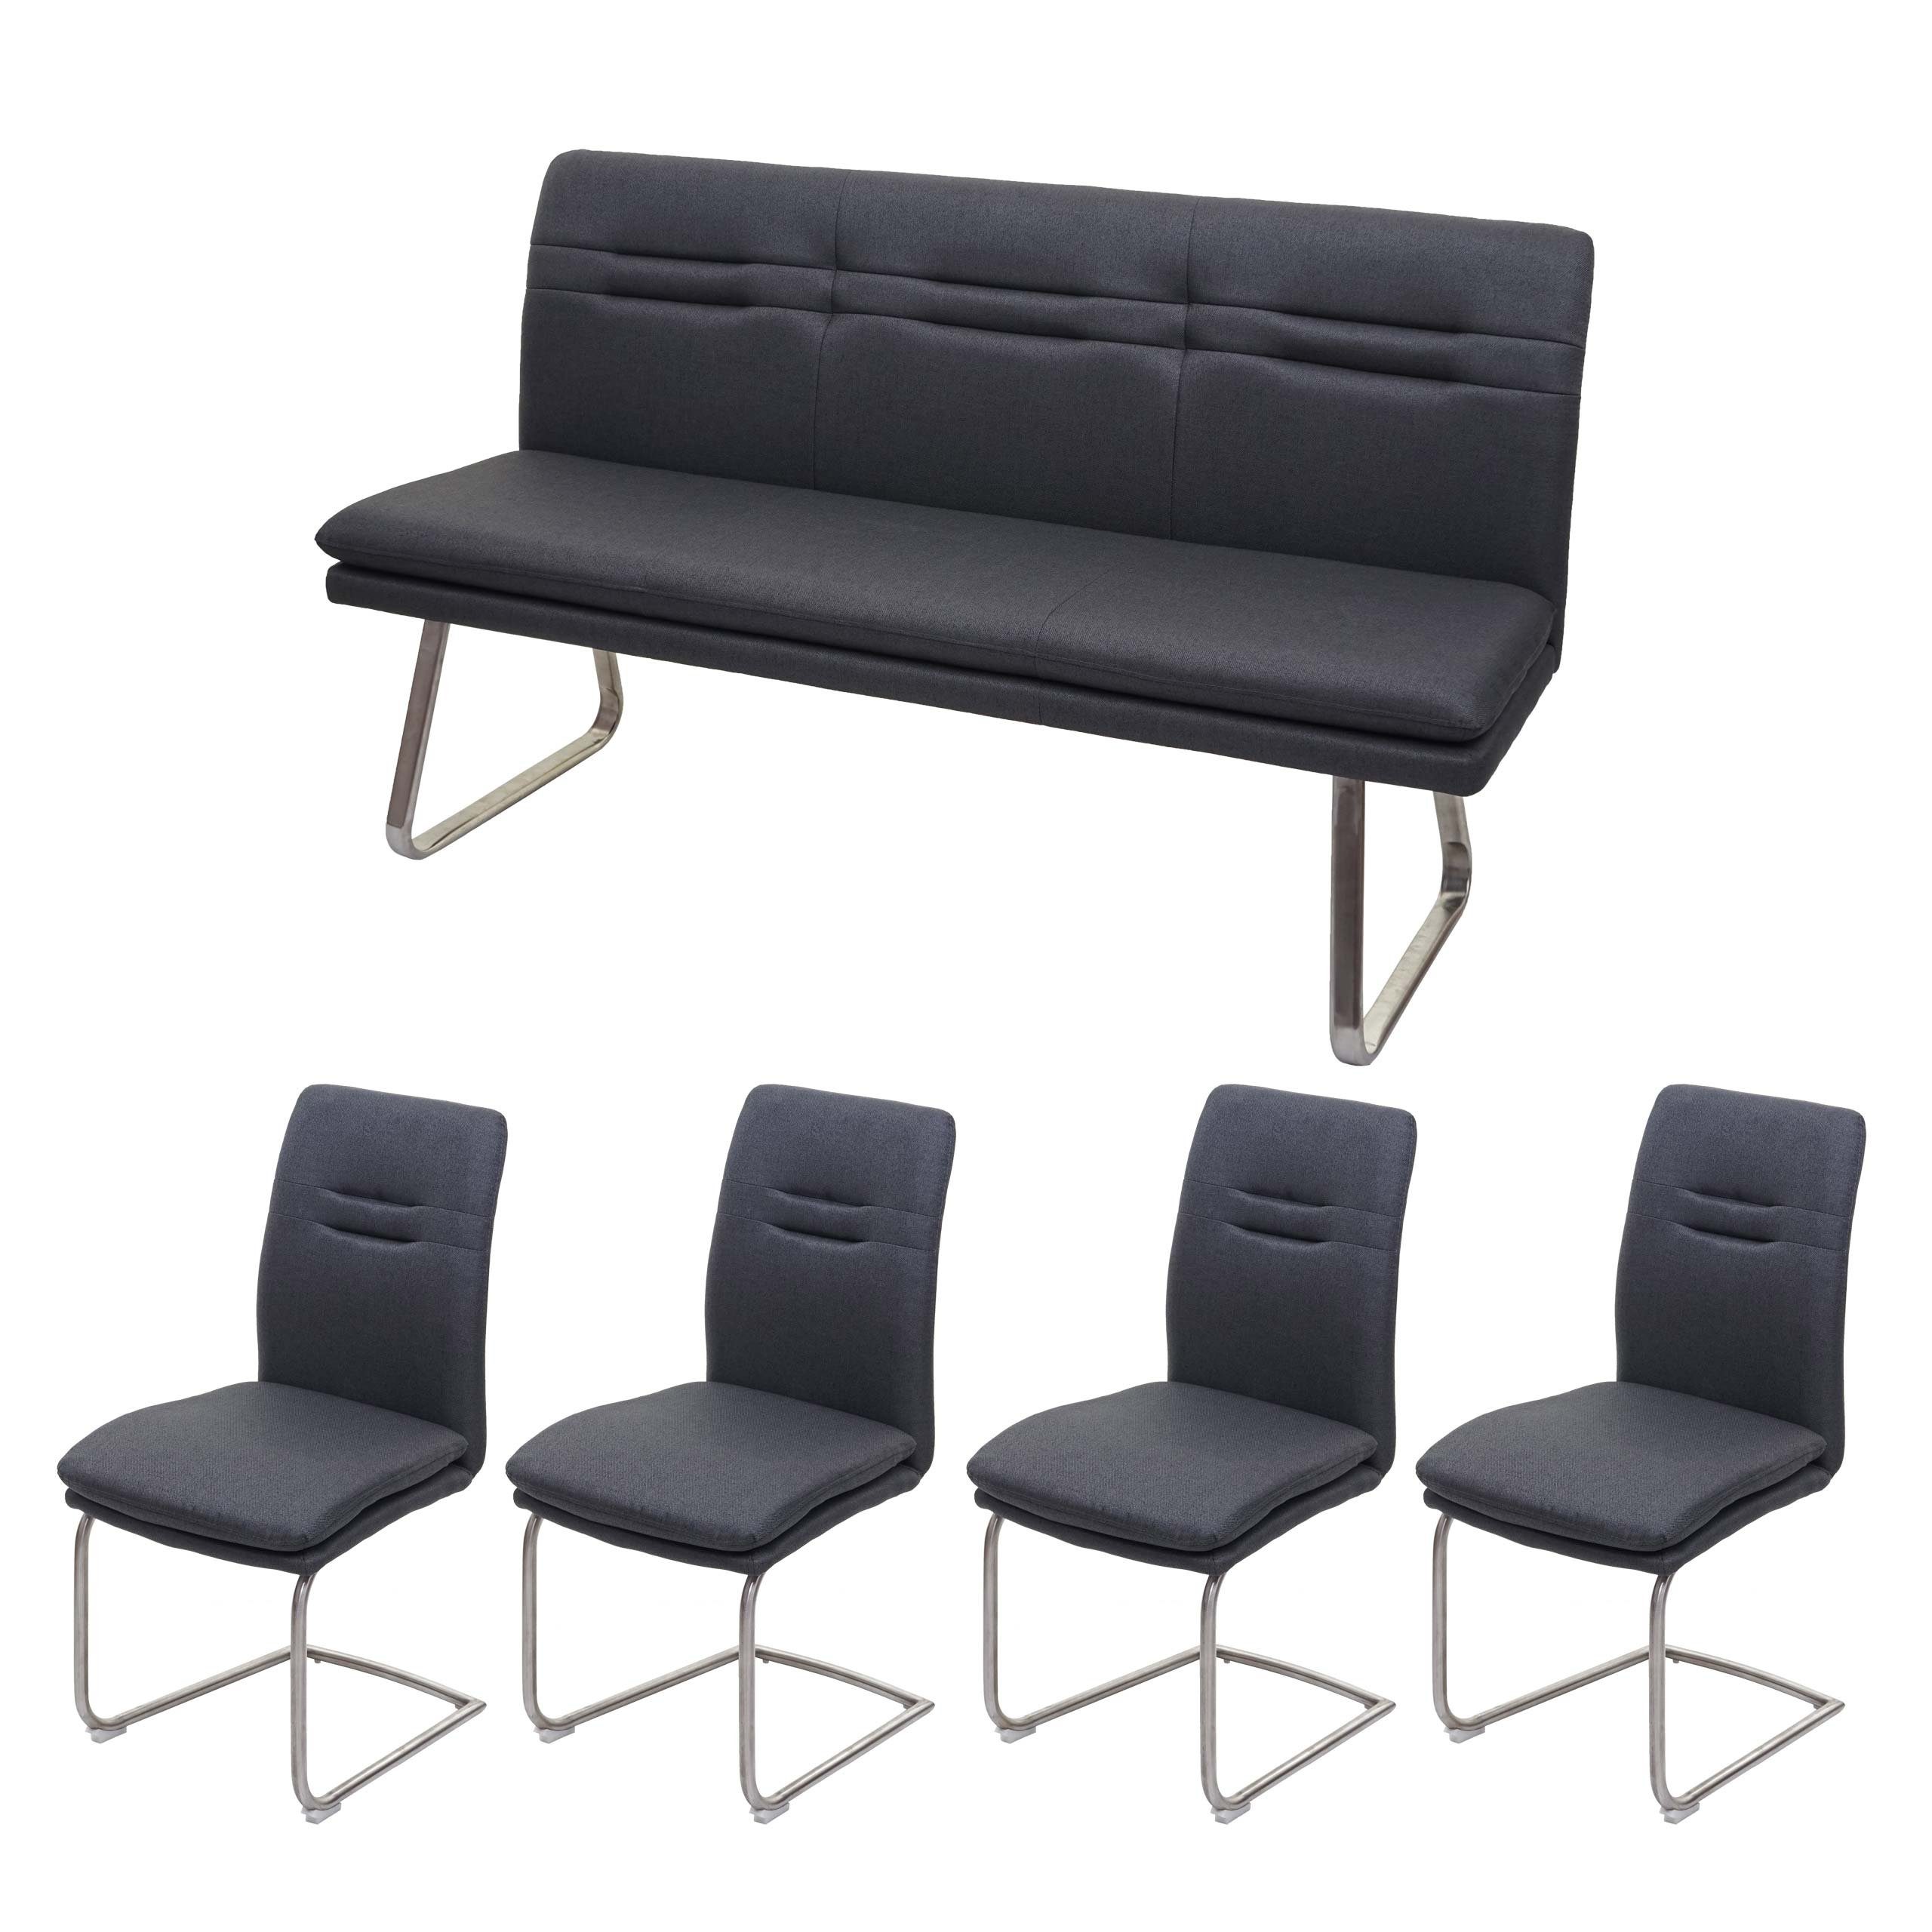 MCW Essgruppe MCW-H70-B, (Set, 5-tlg., 4 Stühle, 1 Tisch, 1 Bank), Bequeme Formgebung, Stabiles Gestell dunkelgrau | Essgruppen